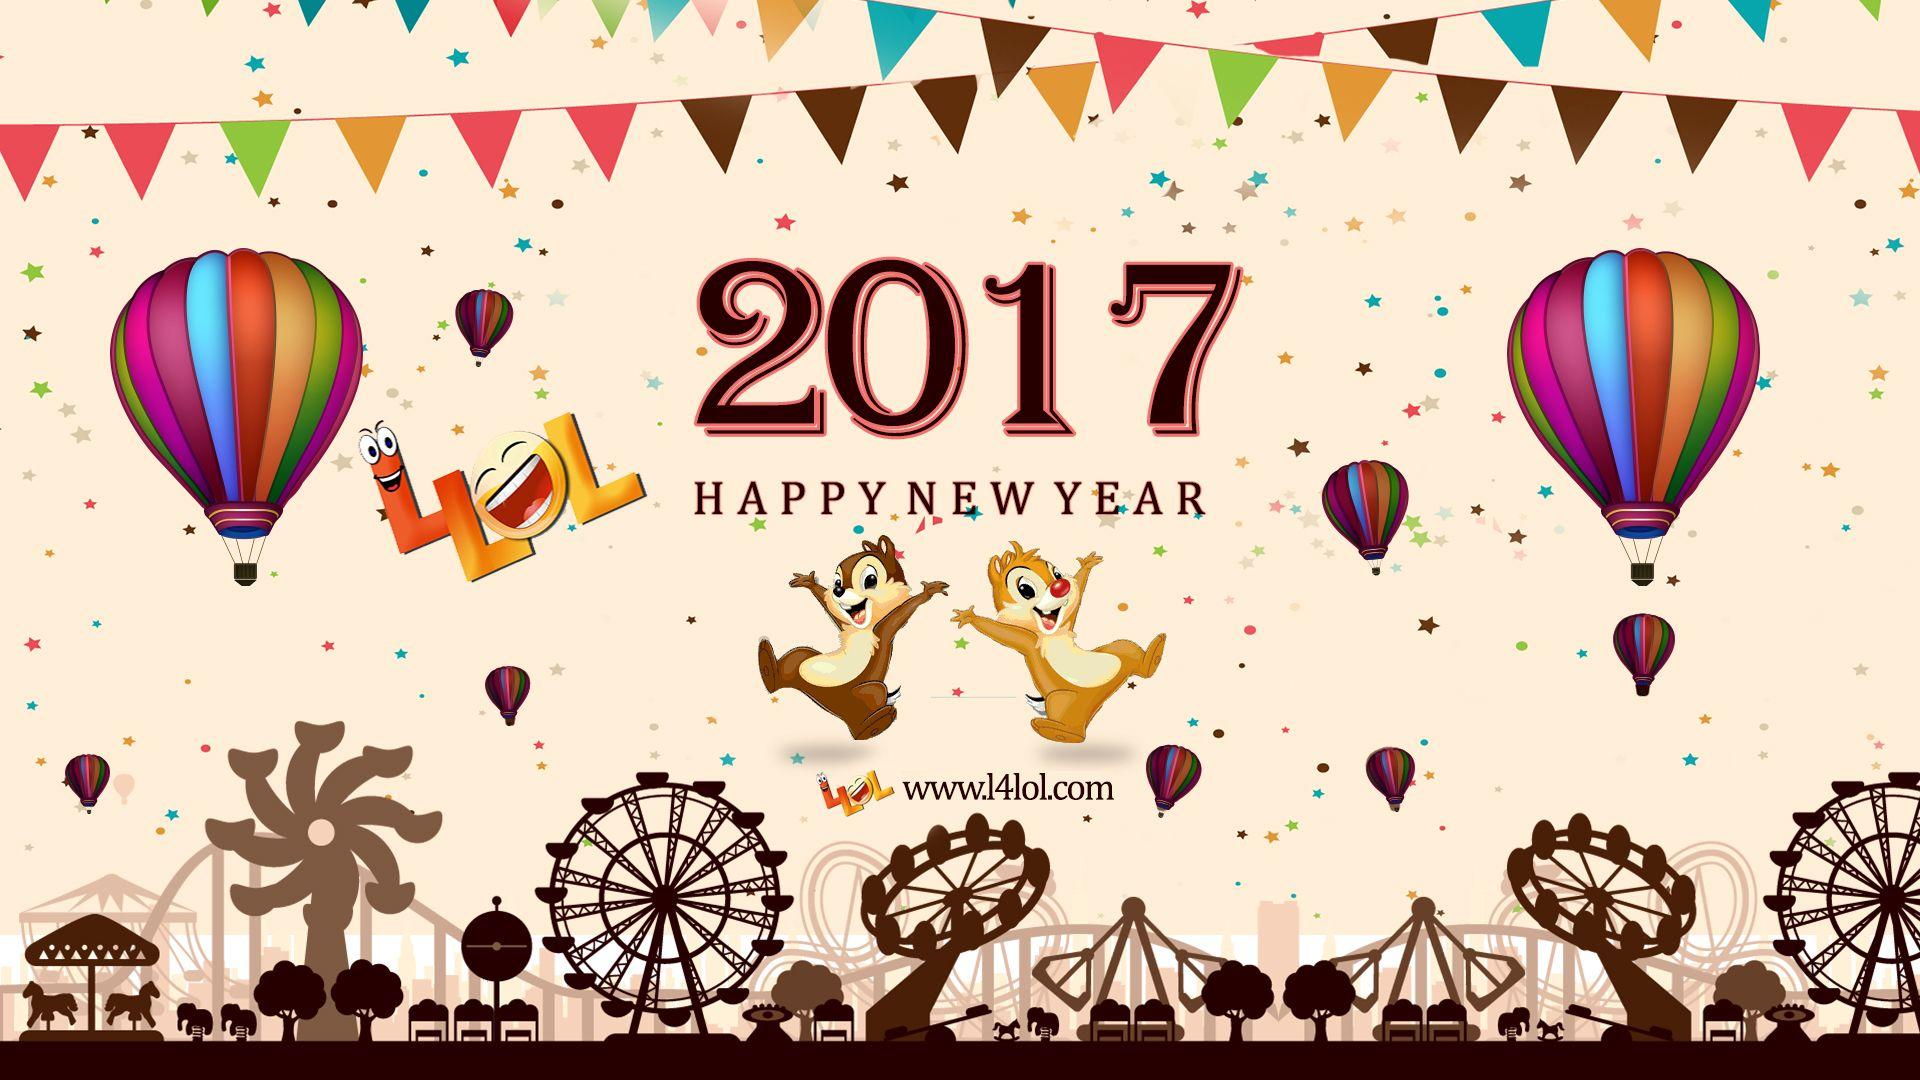 Happy New Year Image 2017. Happy New Year 2017 Wallpaper